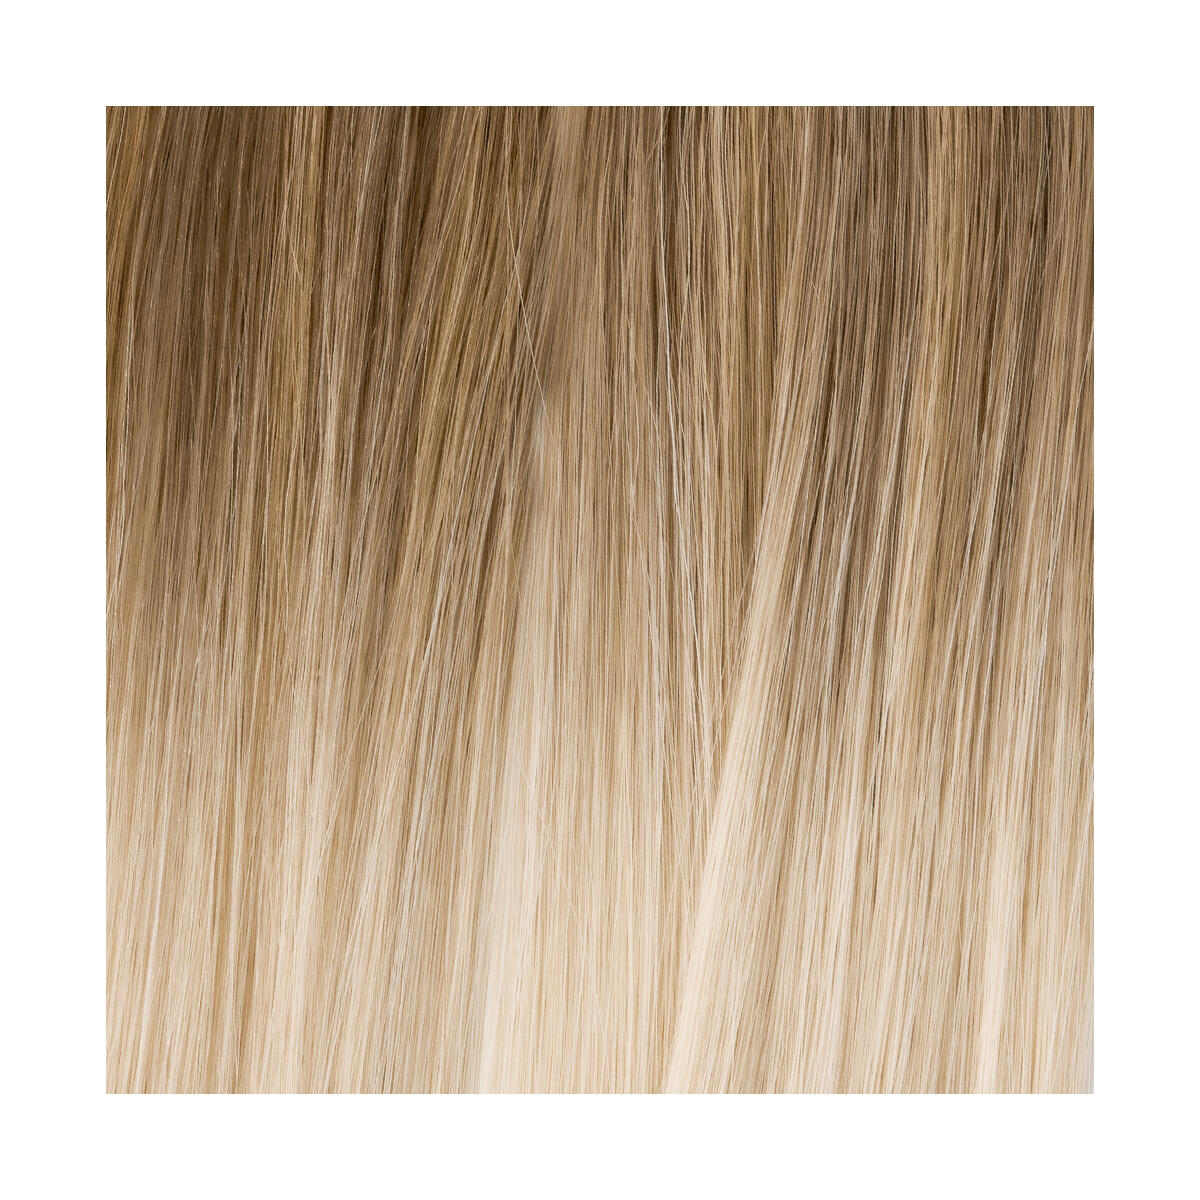 Colour Sample B7.3/10.10 Cool Platinum Blonde Balayage 20 cm